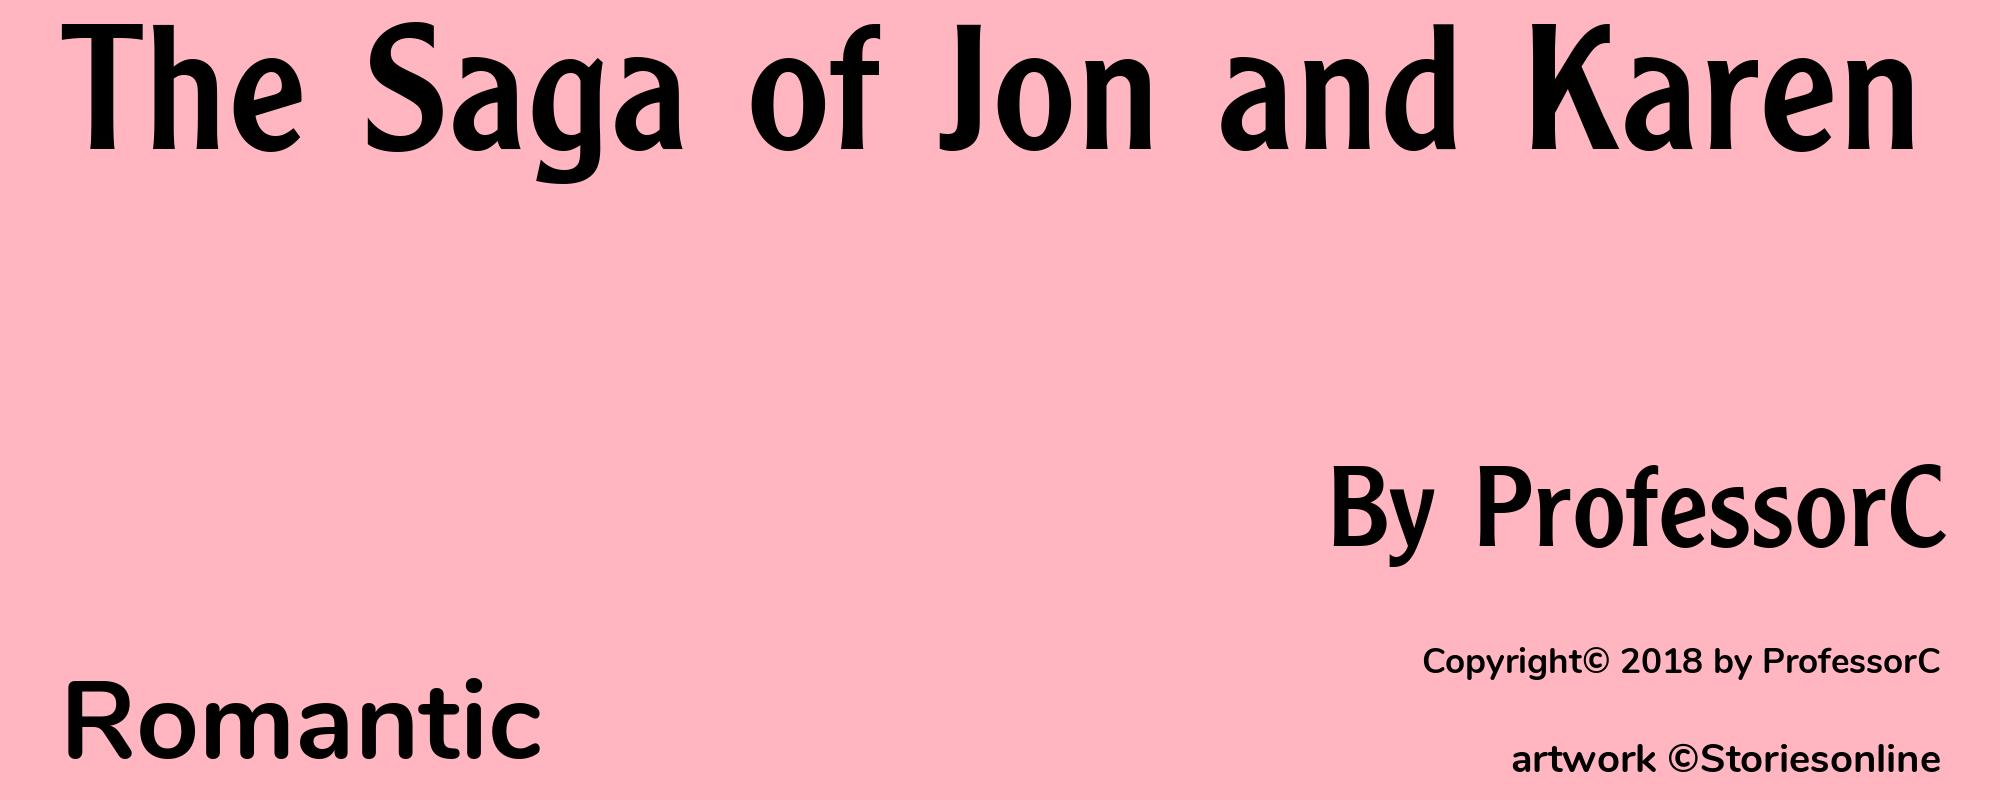 The Saga of Jon and Karen - Cover